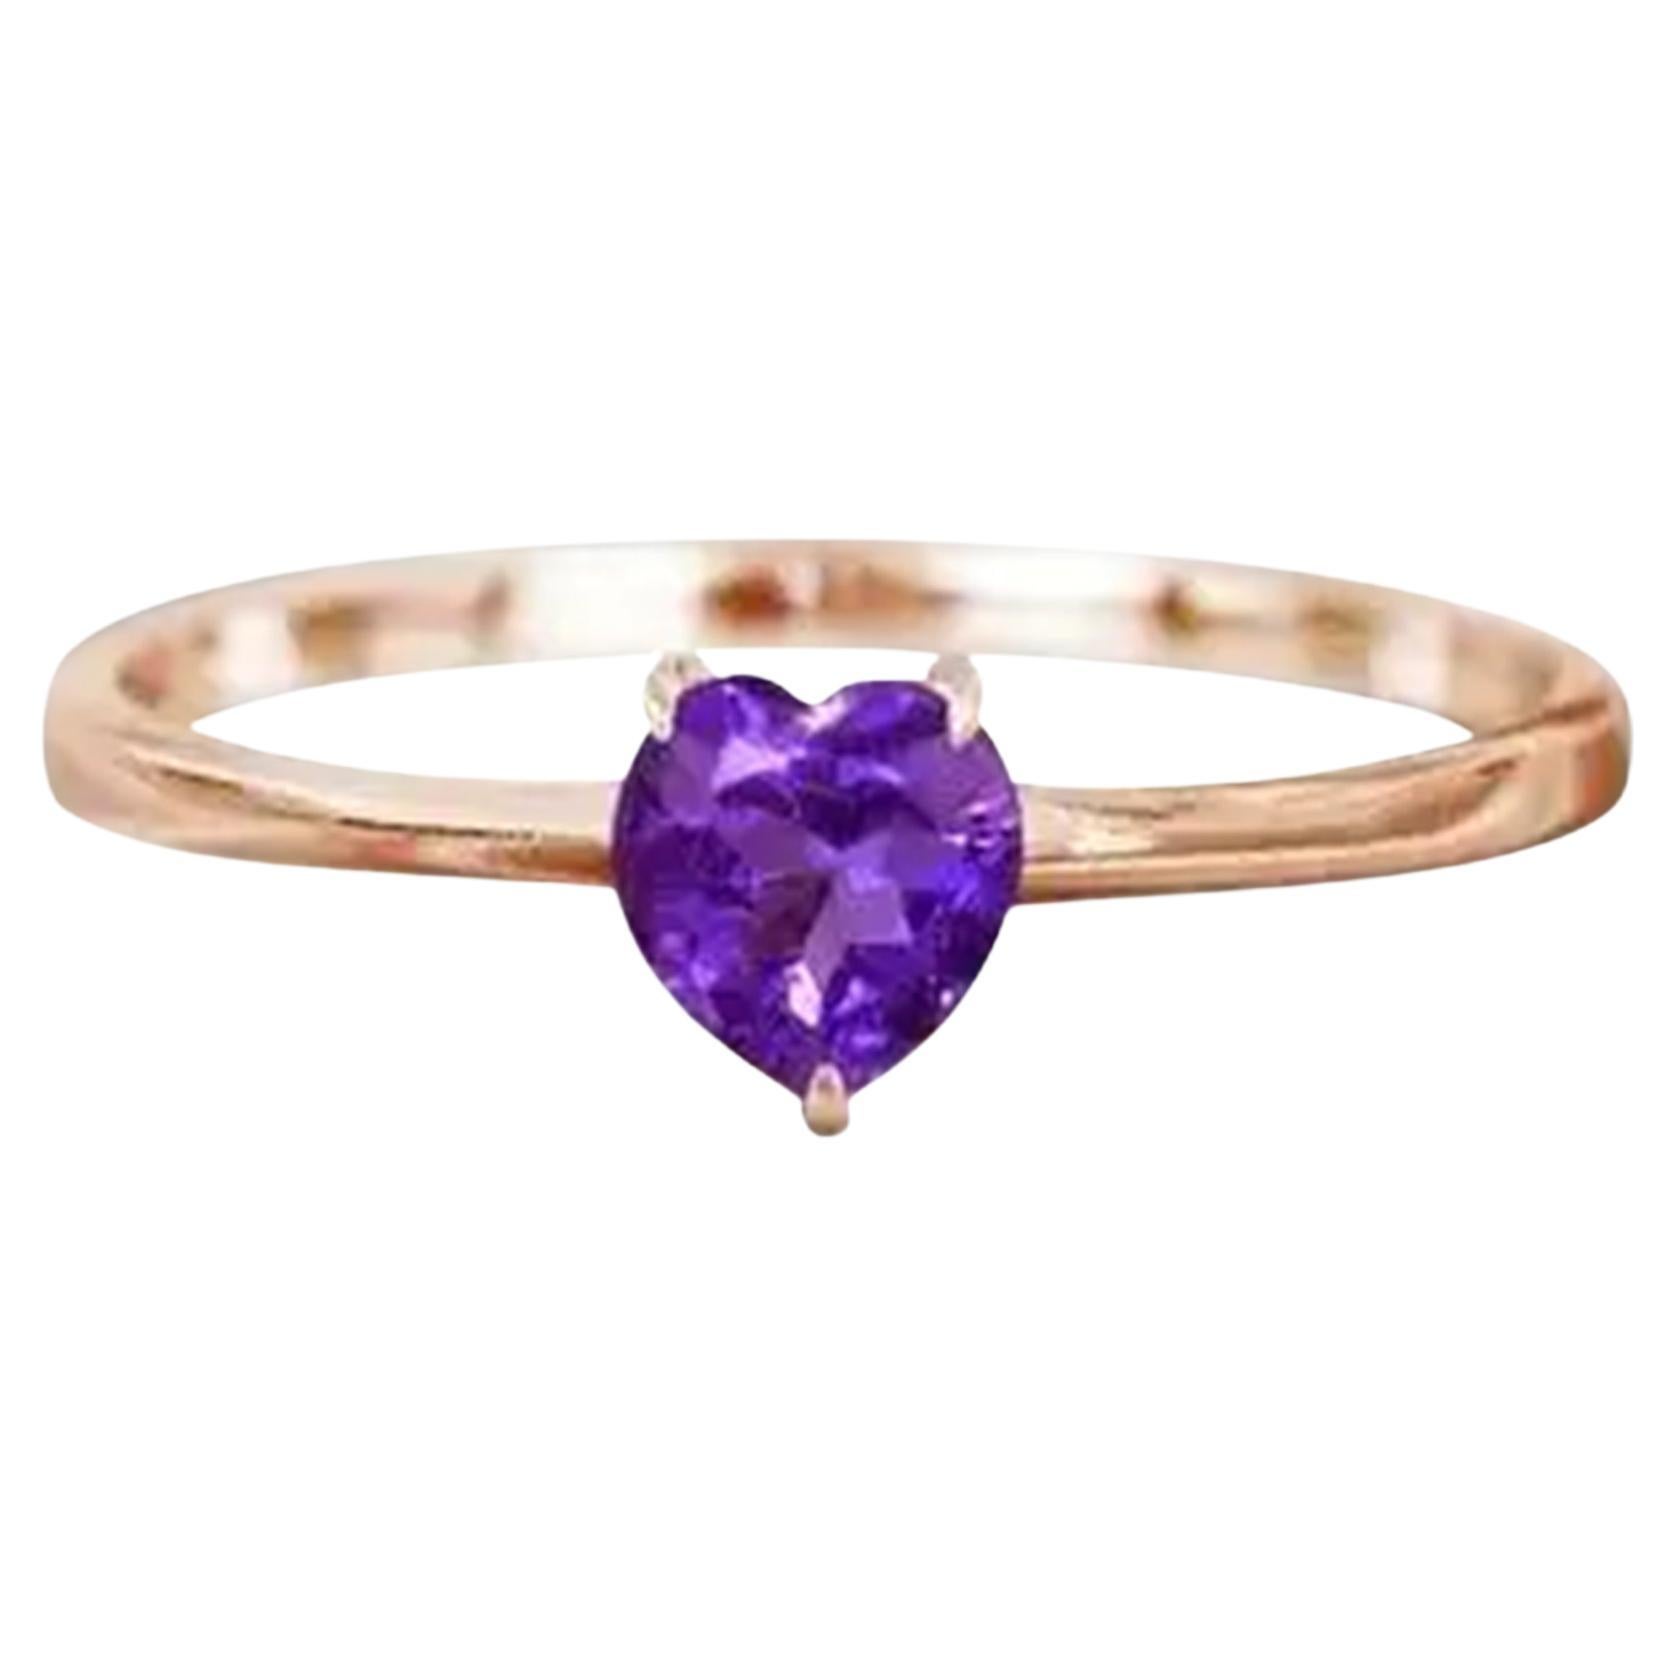 For Sale:  14k Gold Heart Gemstone 5x5 mm Heart Gemstone Ring Gemstone Engagement Ring